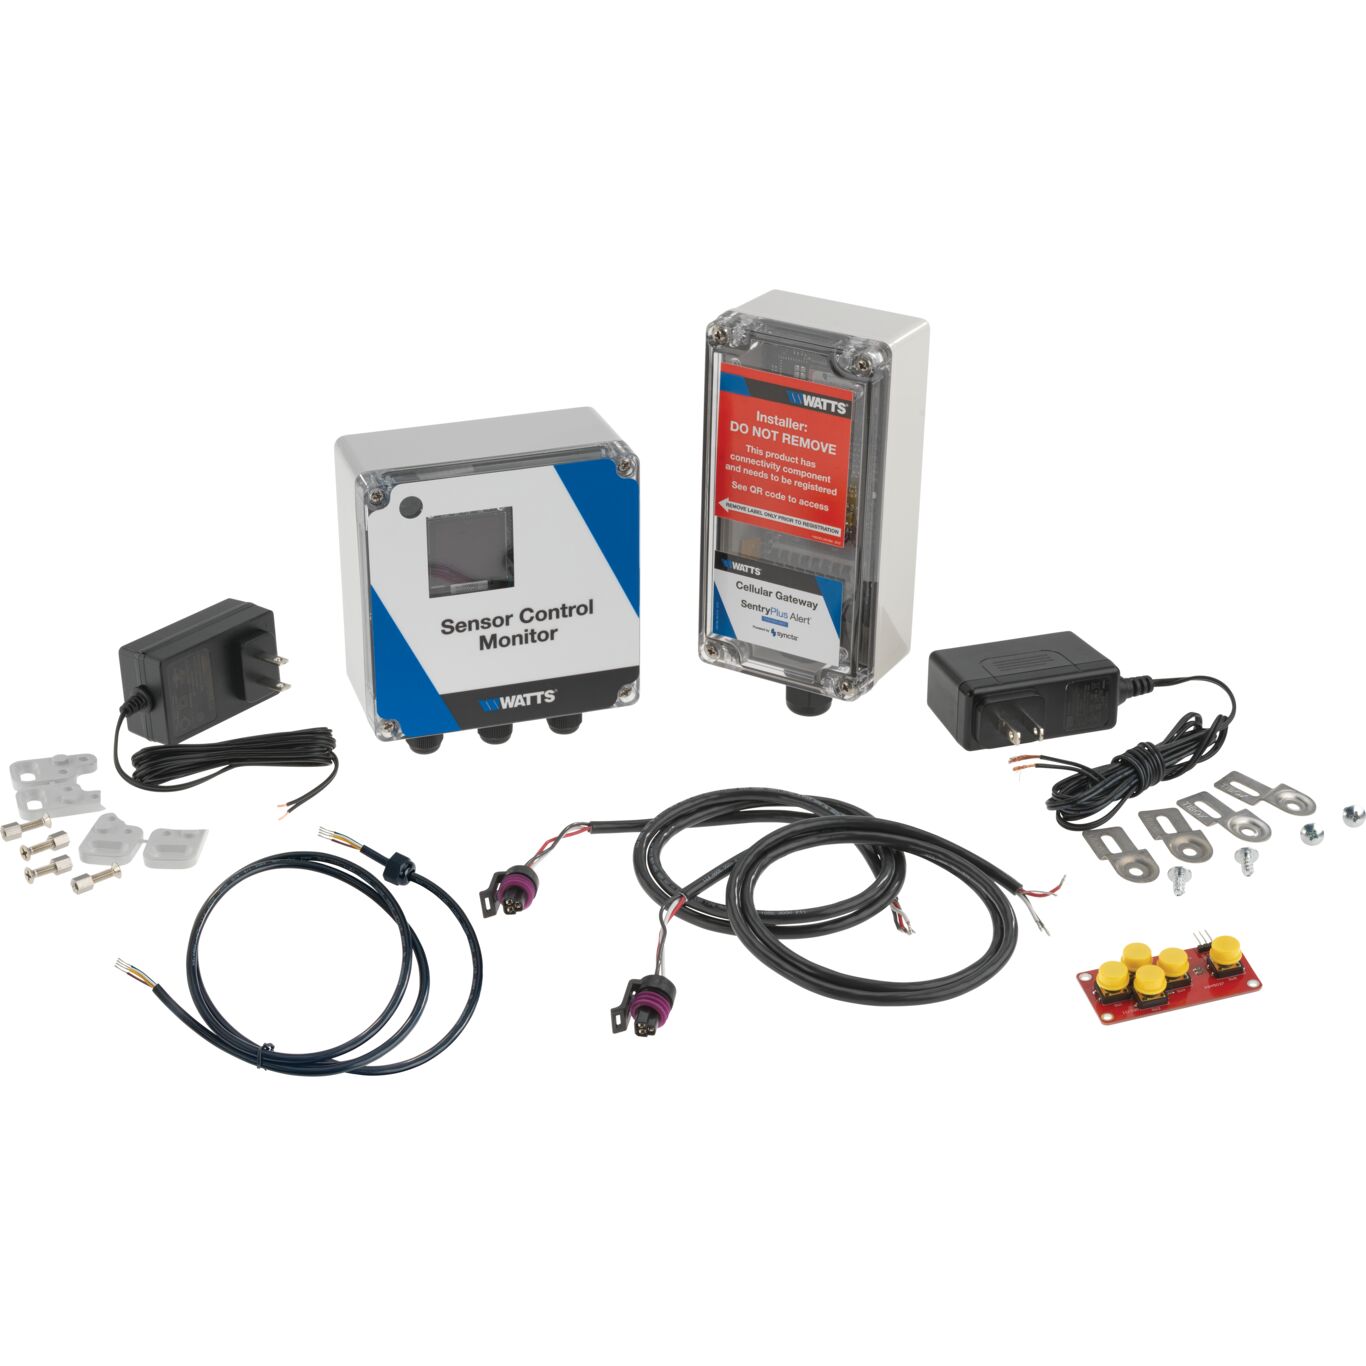 Product Image - Cellular Honeywell Sensor Control Monitor Kit